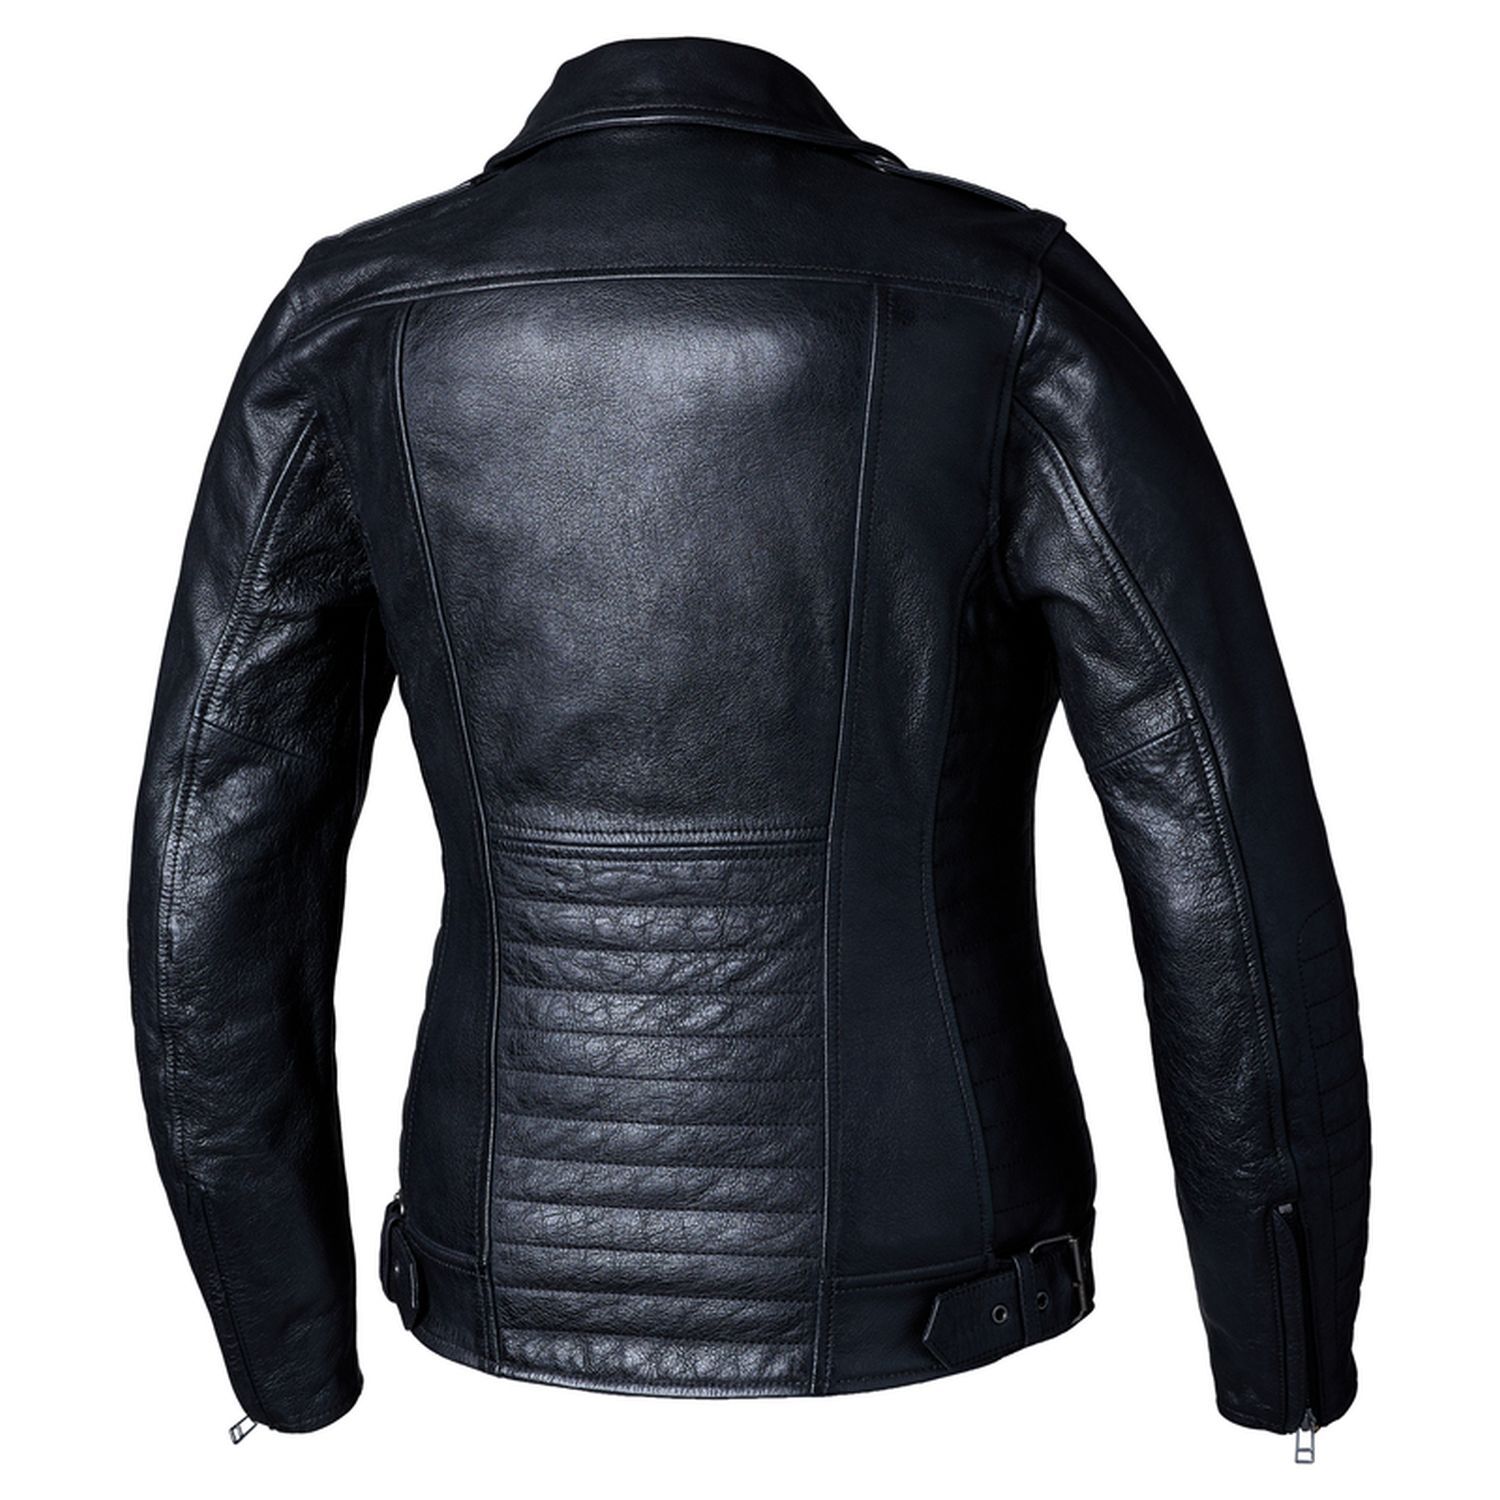 RST Women's Ripley 2 Leather Jacket online bobleisure